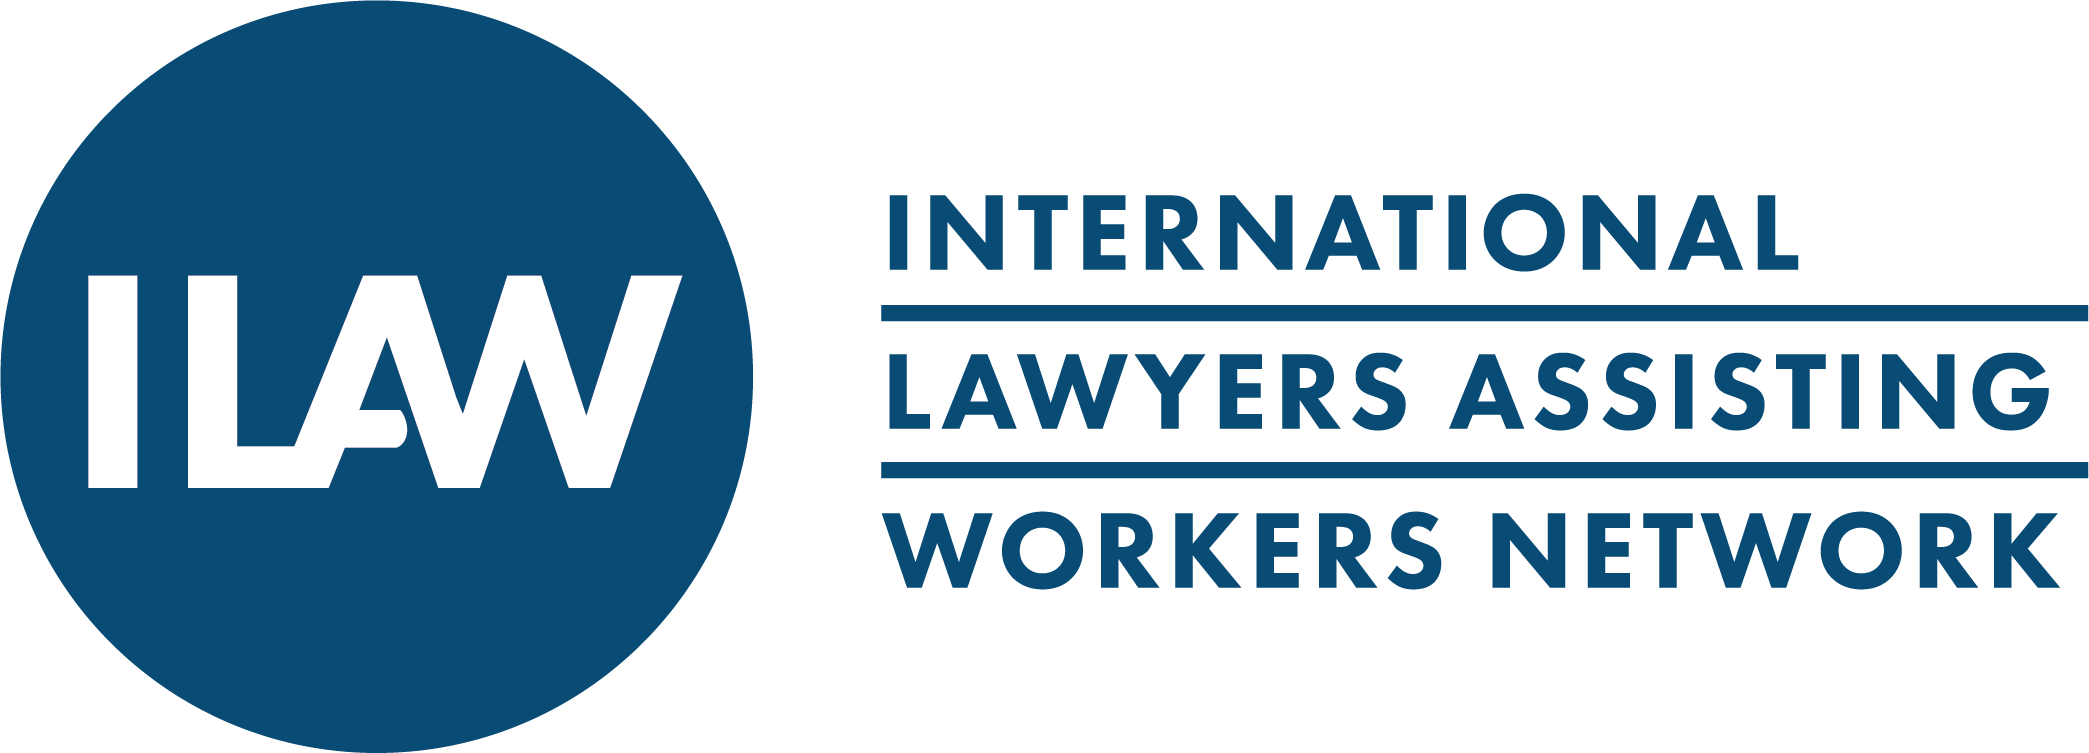 ILAW_logo.png